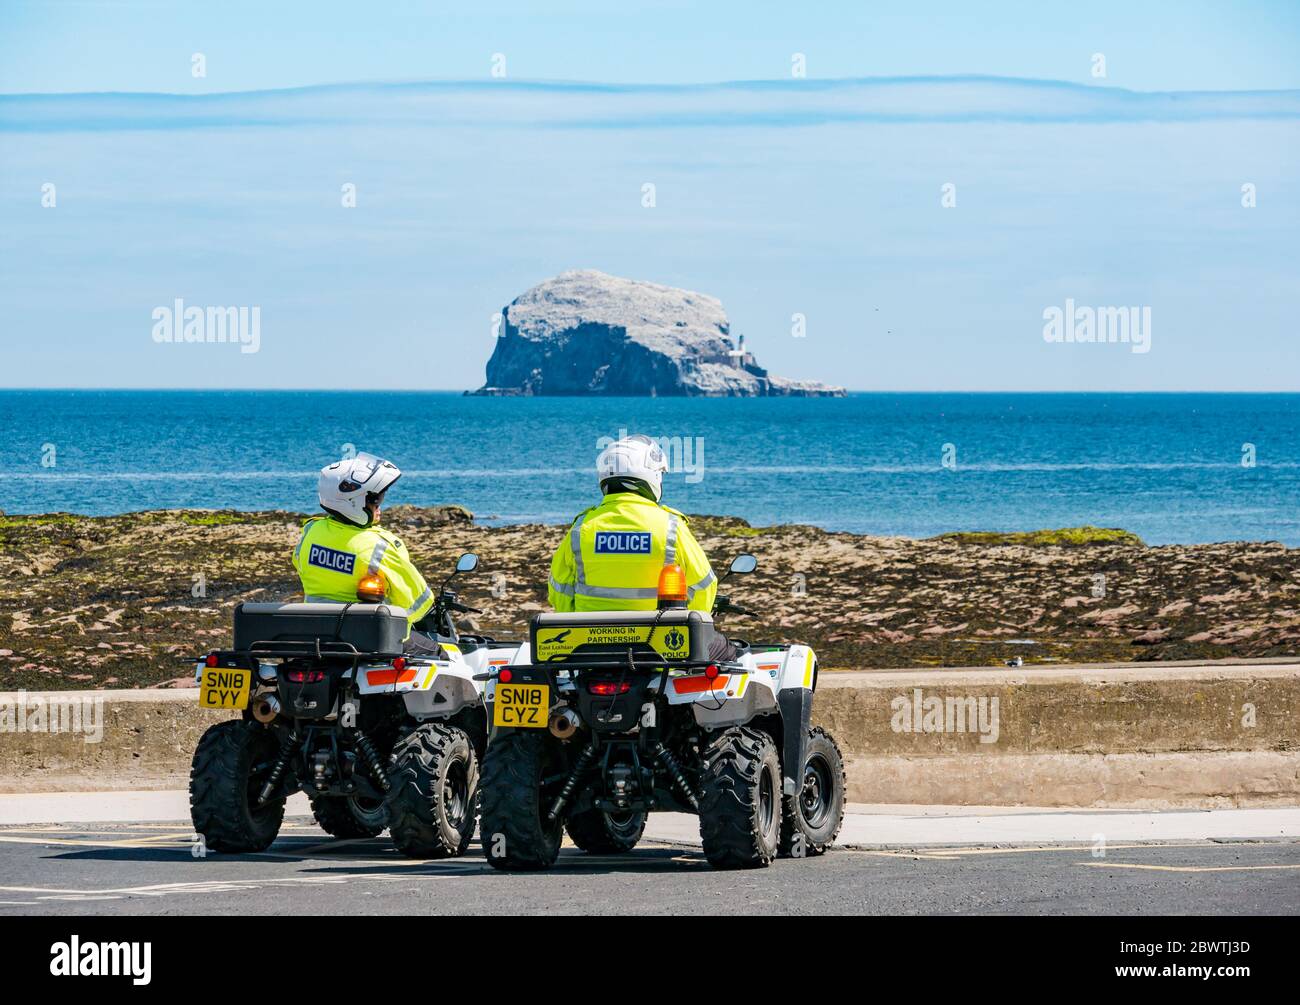 Police patrol beach on quad bikes, North Berwick, East Lothian, Scotland, UK Stock Photo